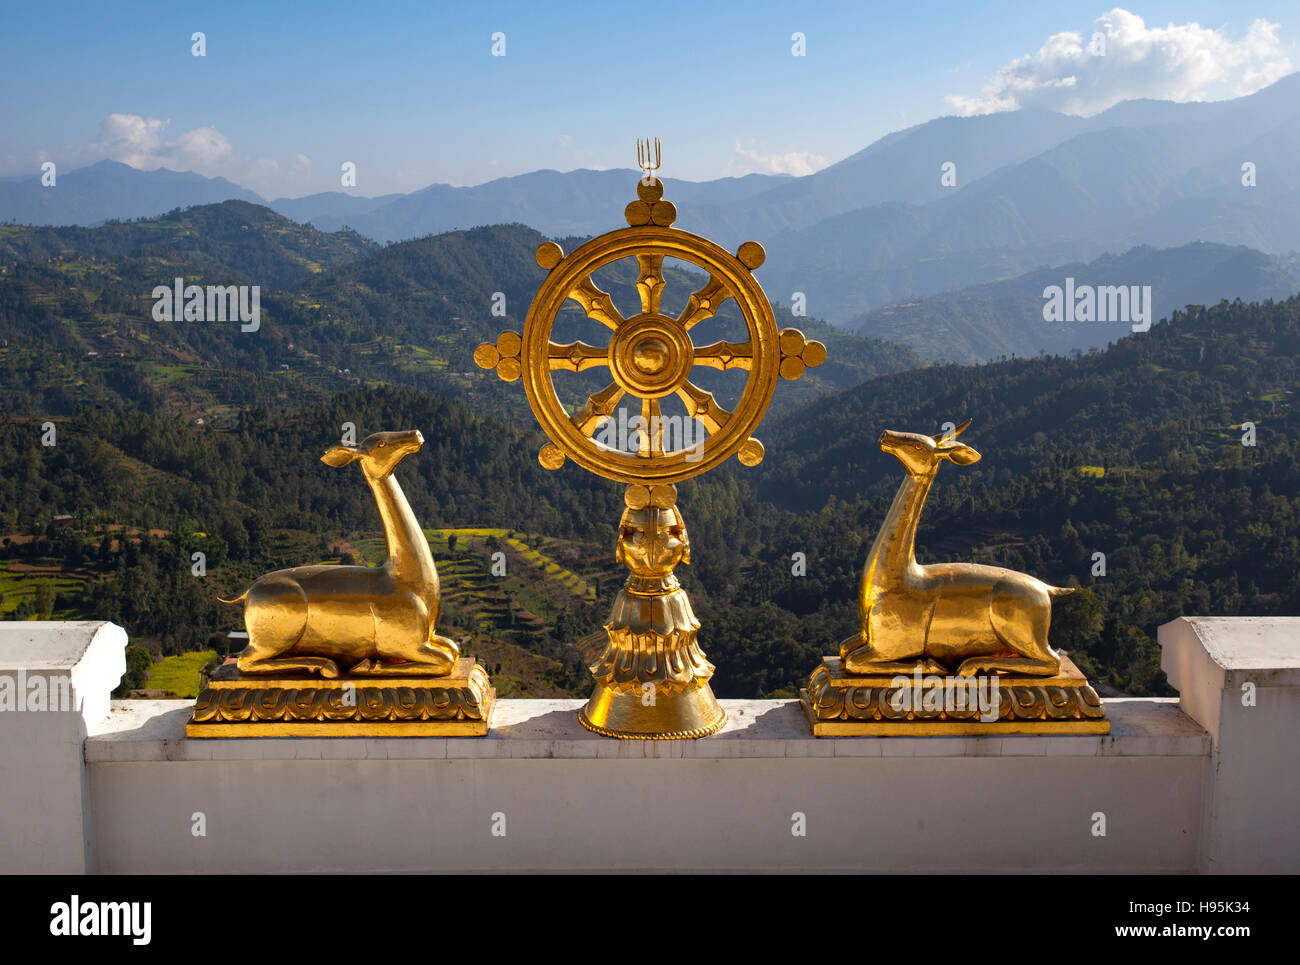 The Wheel of Dharma (Dharmacakra) of the Thrangu Tashi Yangtse Buddhist monastery in Namo Buddha. Nepal. Stock Photo